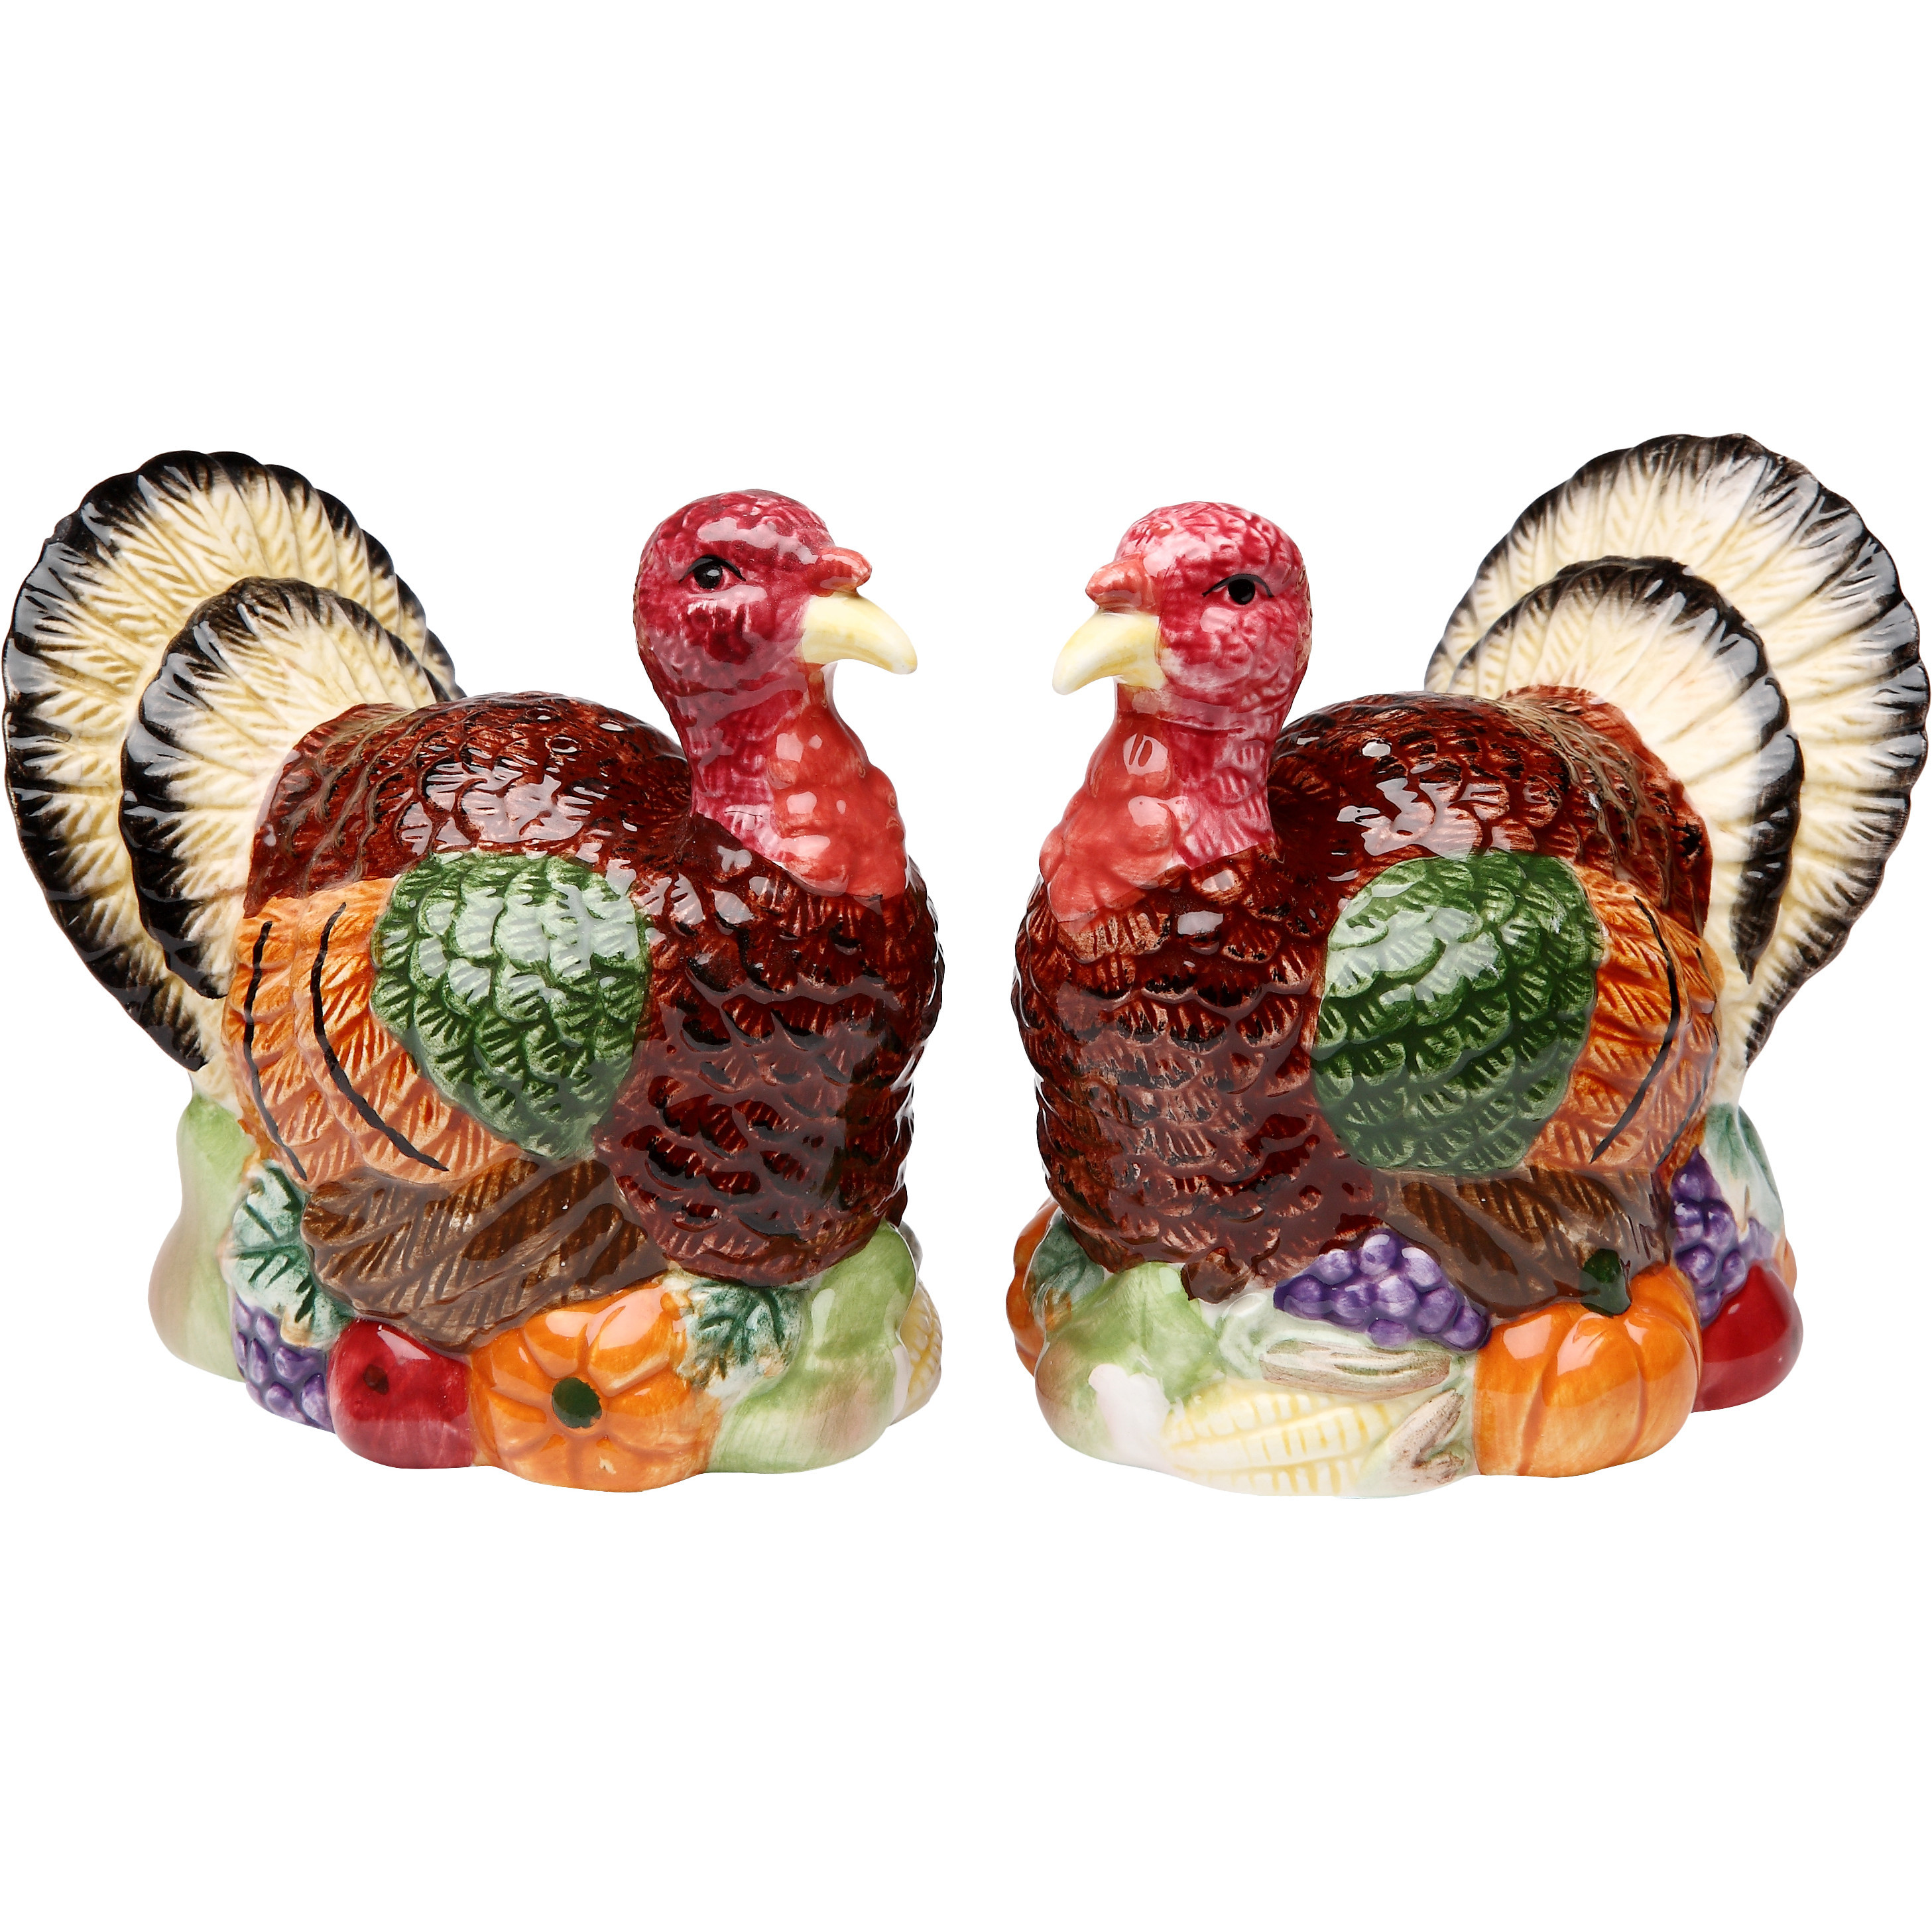 Publix Thanksgiving Turkey
 CosmosGifts Turkey Salt and Pepper Set & Reviews